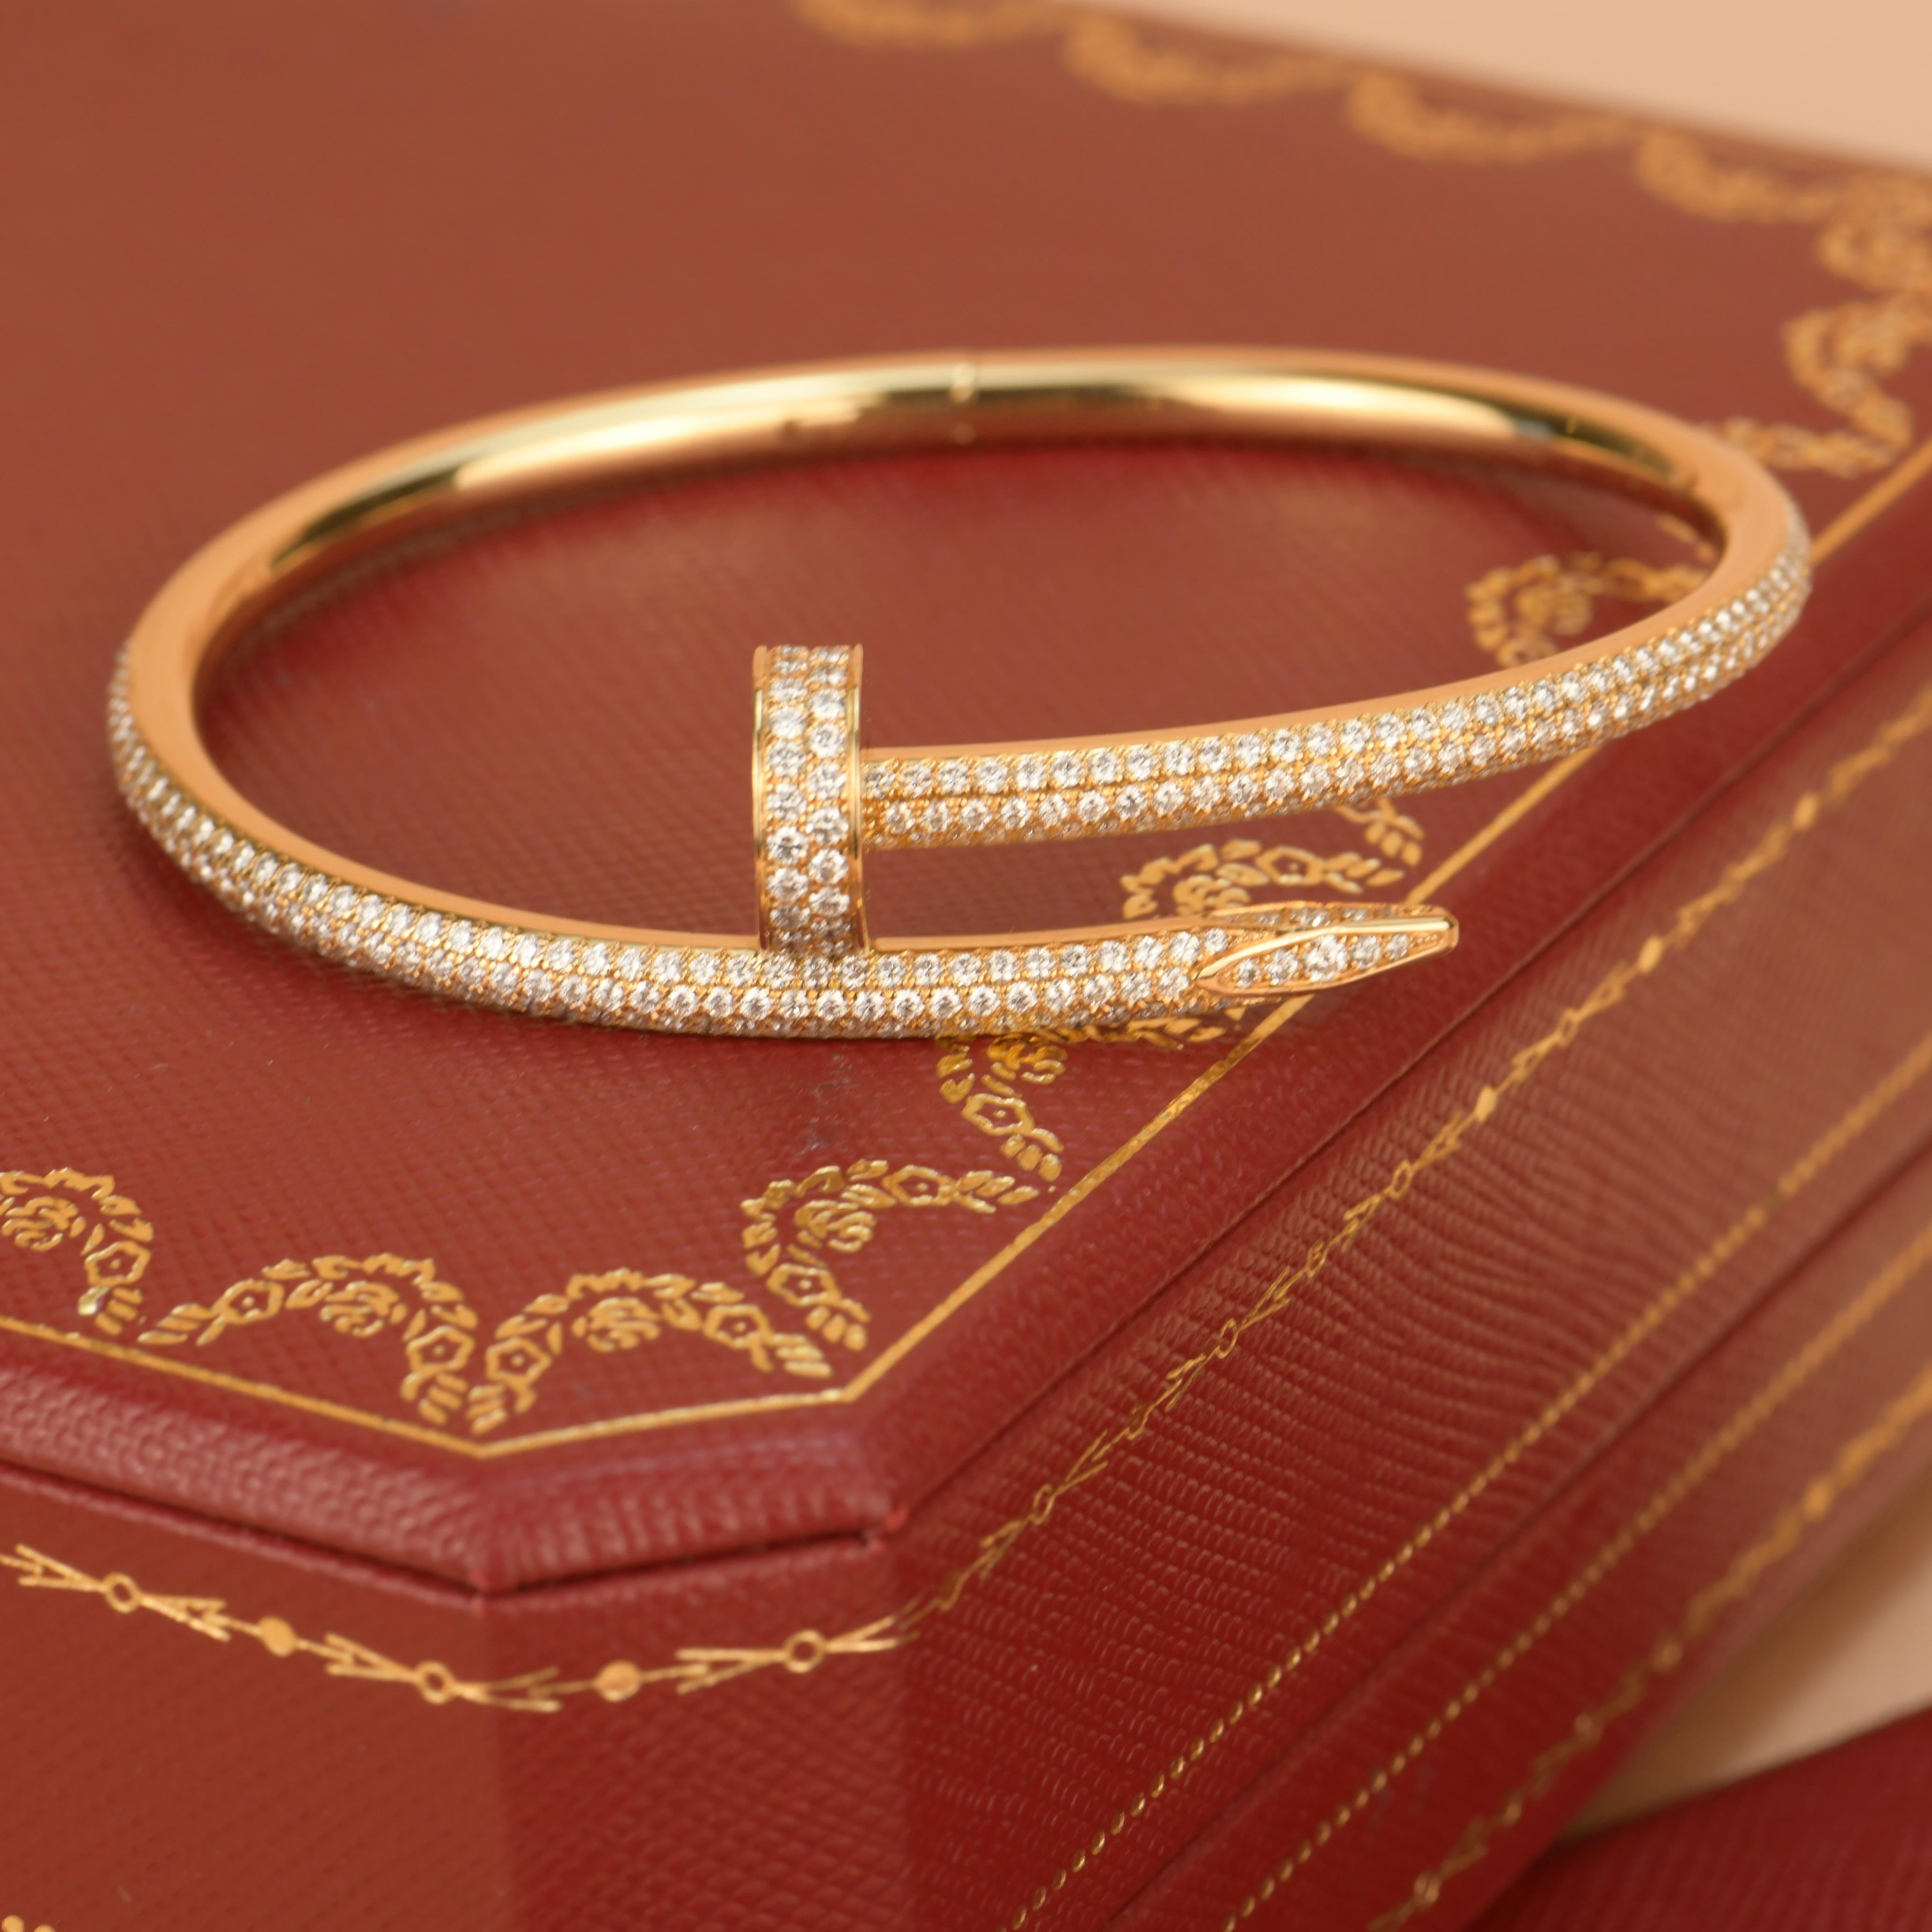 Cartier Gold Pave Diamond Juste Un Clou Bracelet Size 16 In Excellent Condition For Sale In Banbury, GB